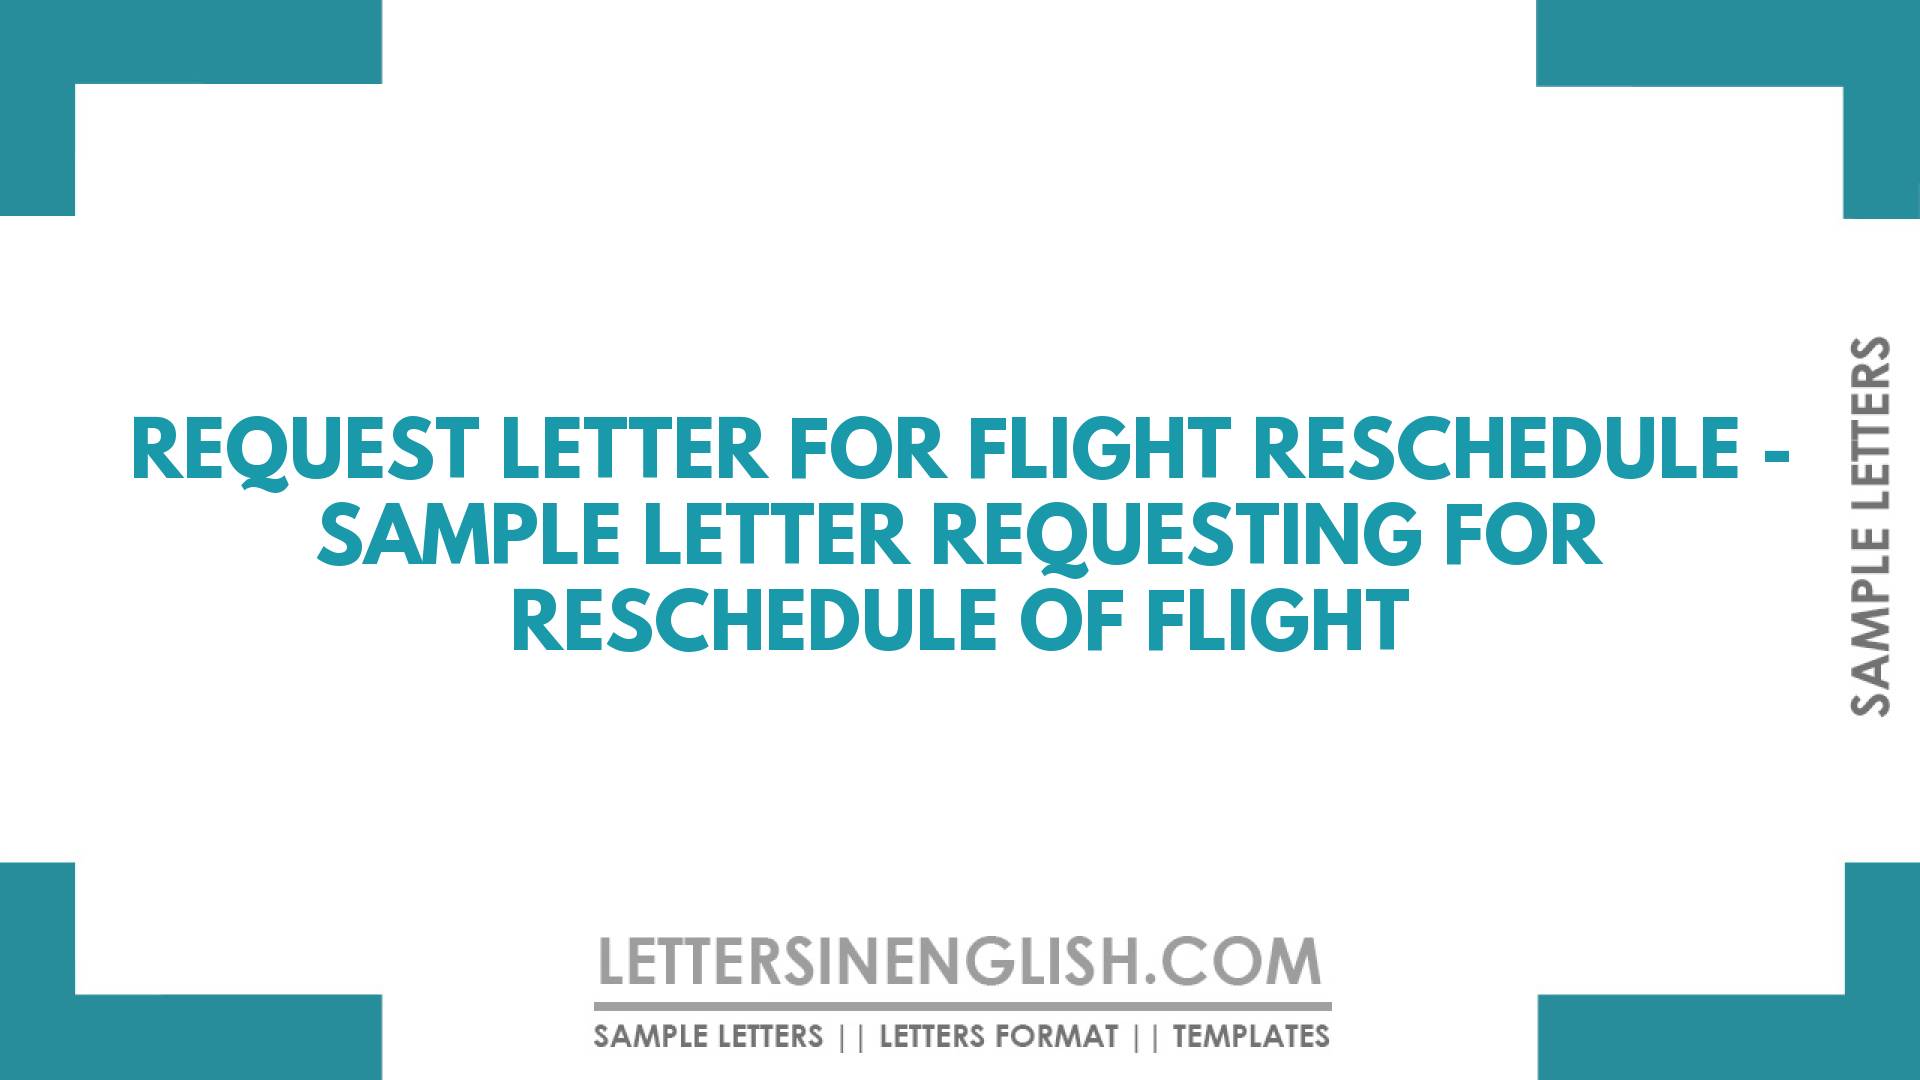 Request Letter for Flight Reschedule – Sample Letter Requesting for Reschedule of Flight